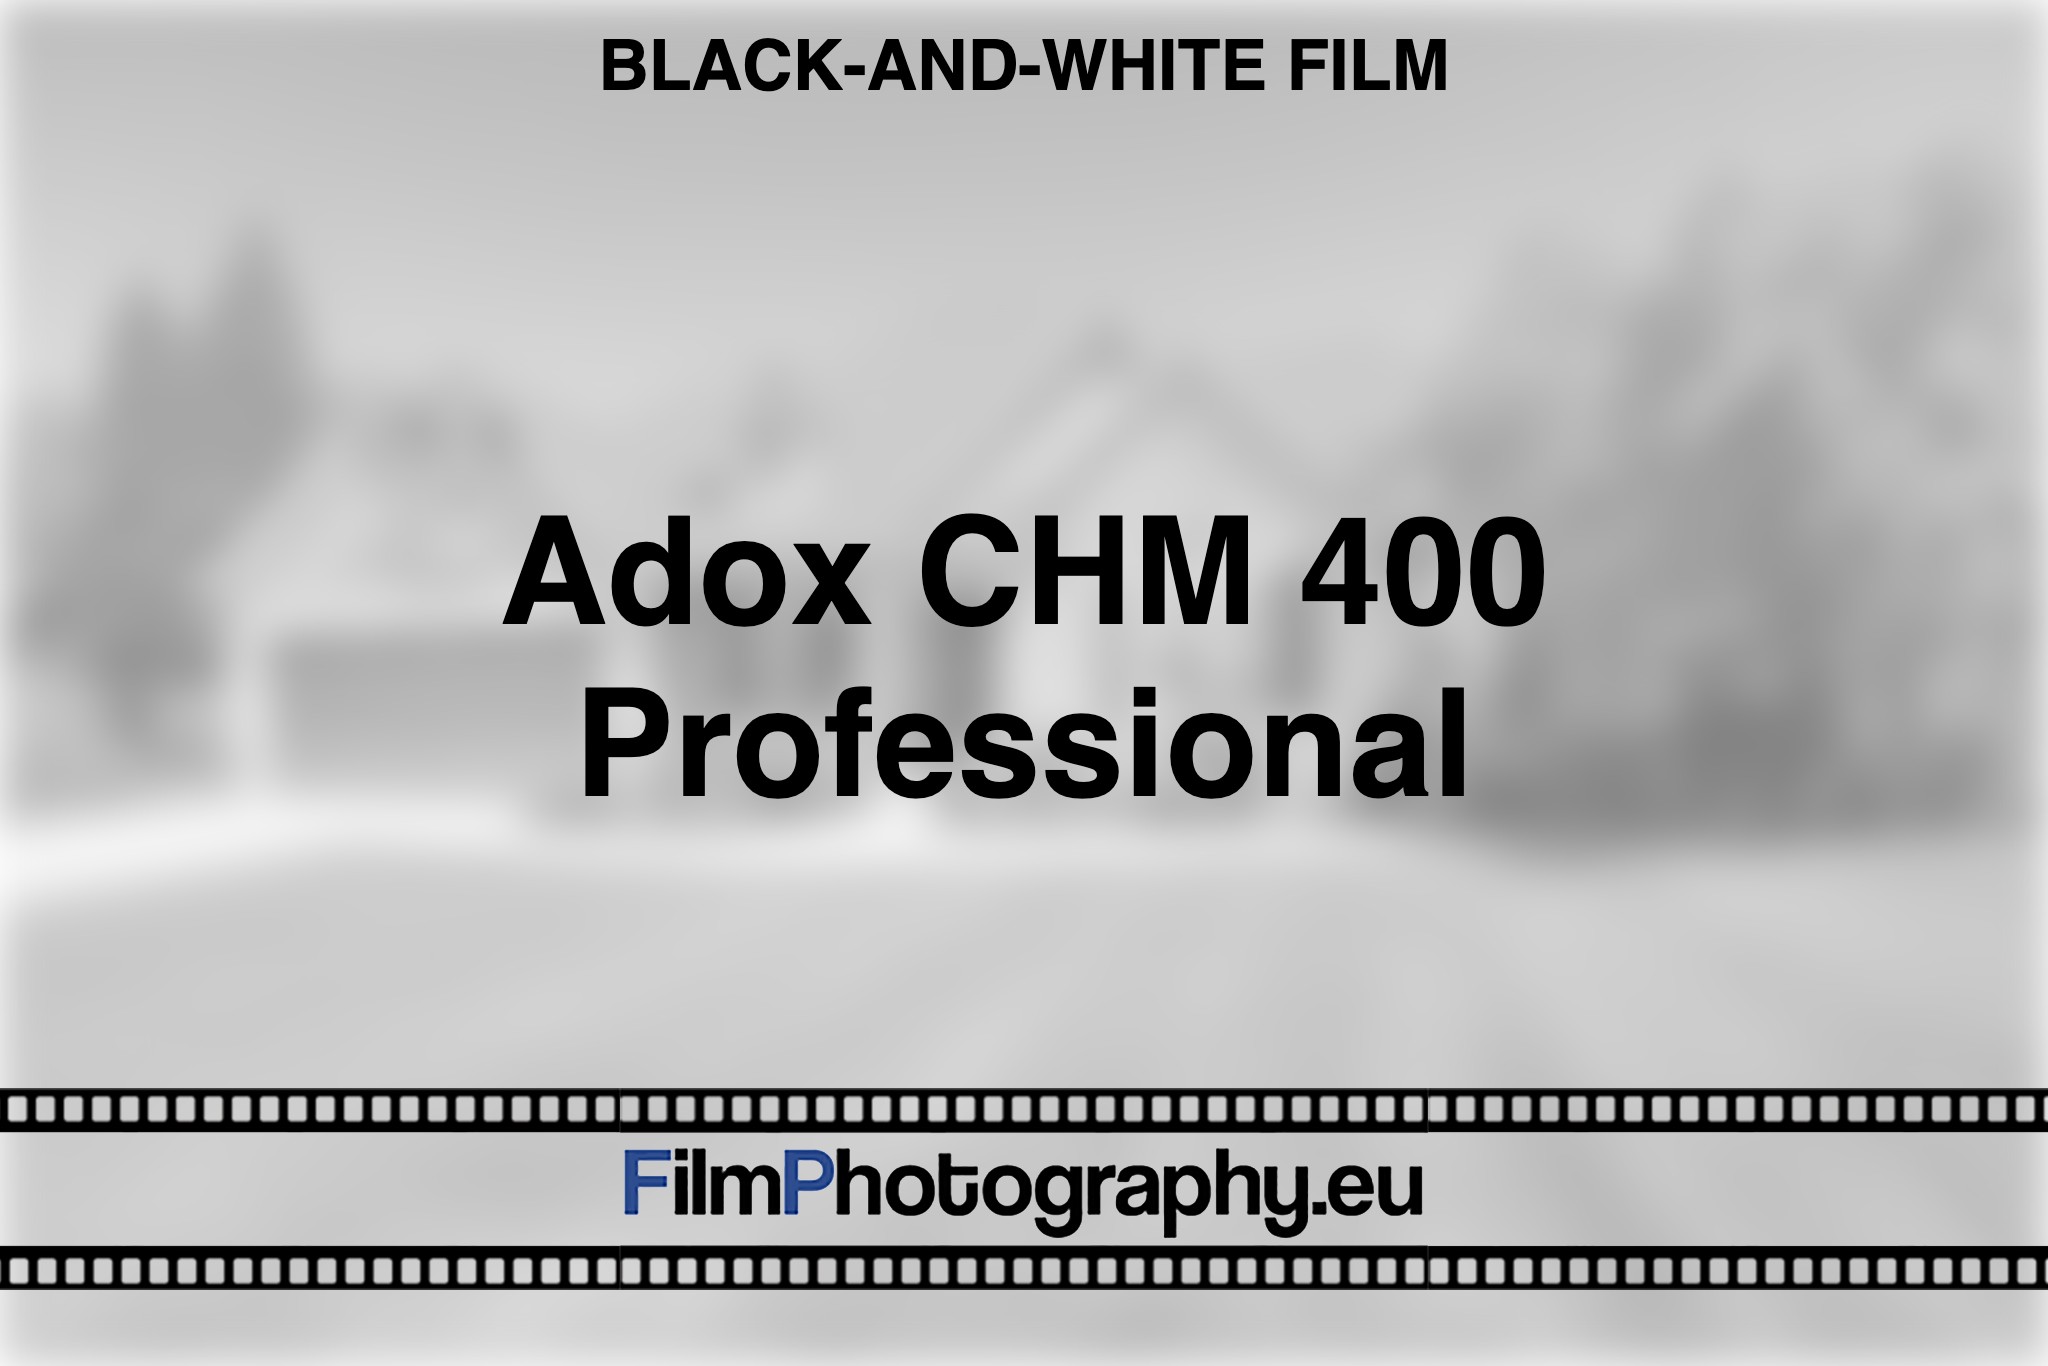 adox-chm-400-professional-black-and-white-film-bnv